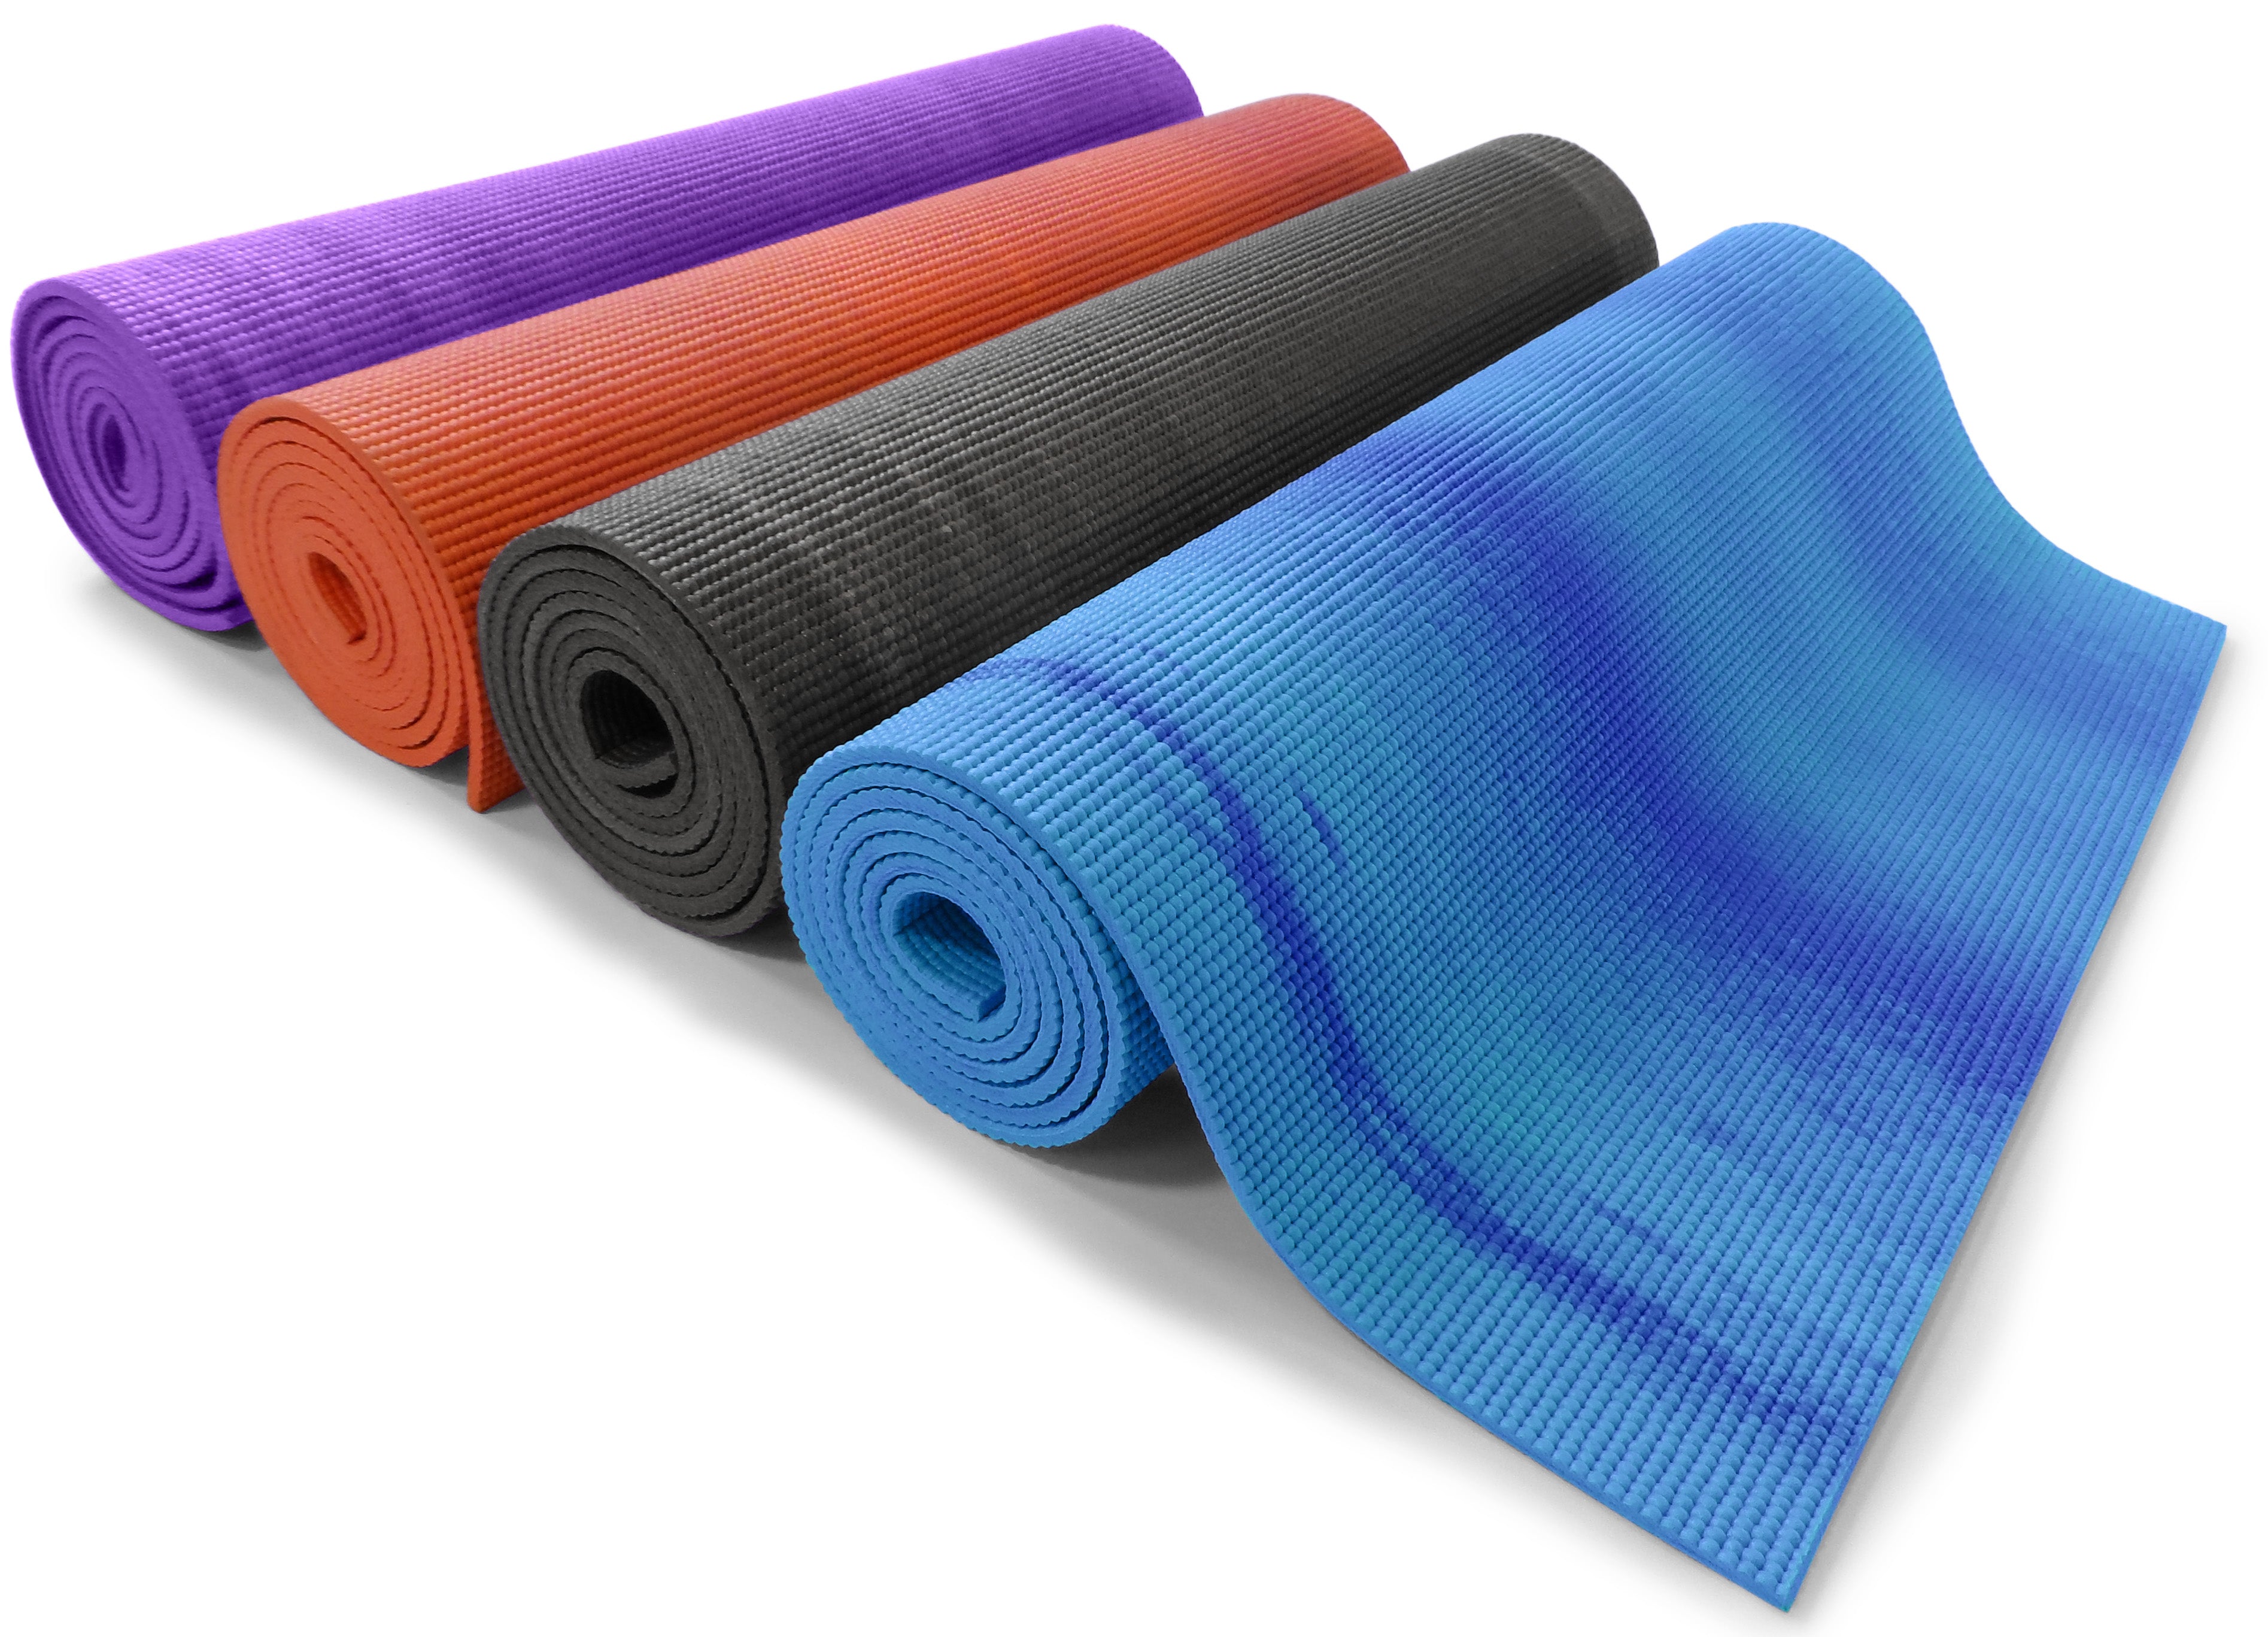 Yoga Mat - Non-Toxic, Phthalate Free, 6mm Thick